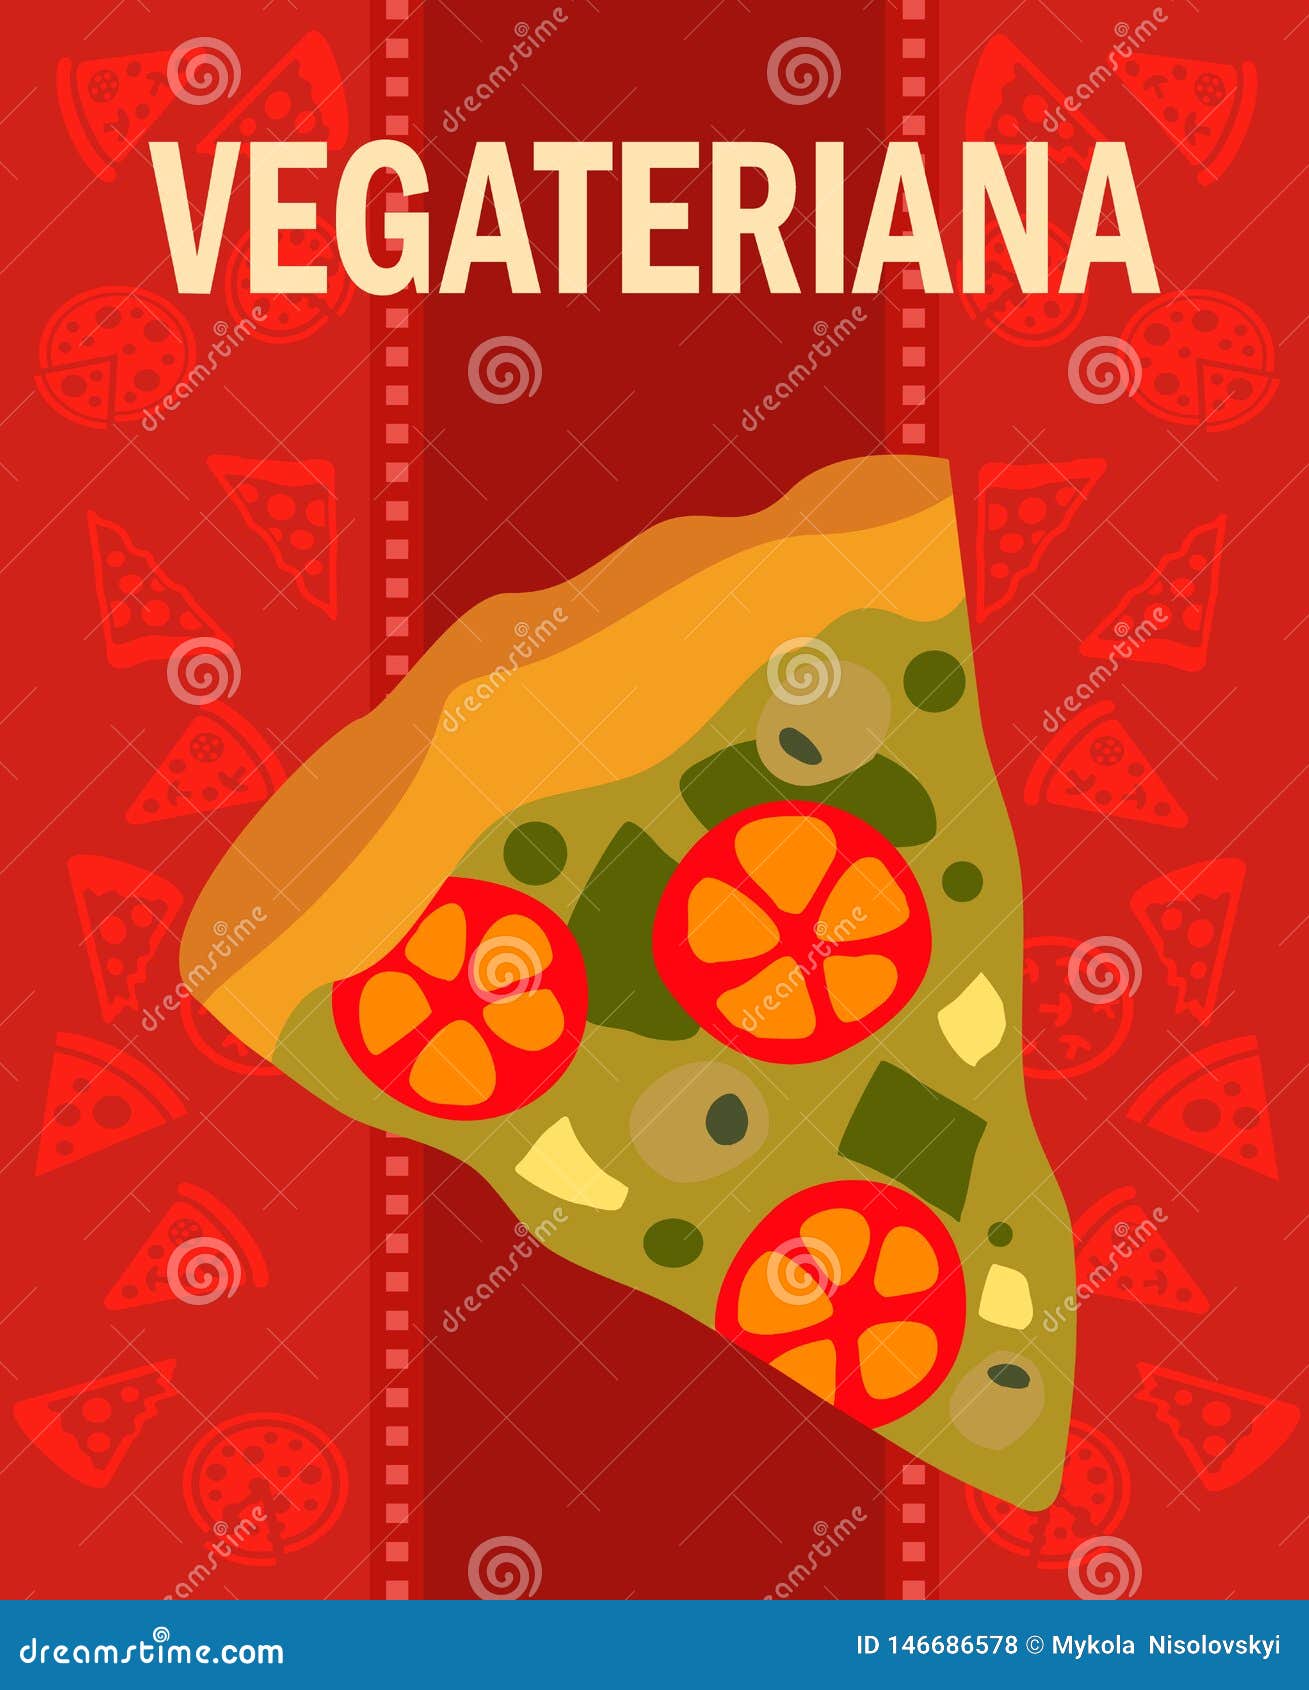 vegetariana pizza slice cartoon  poster